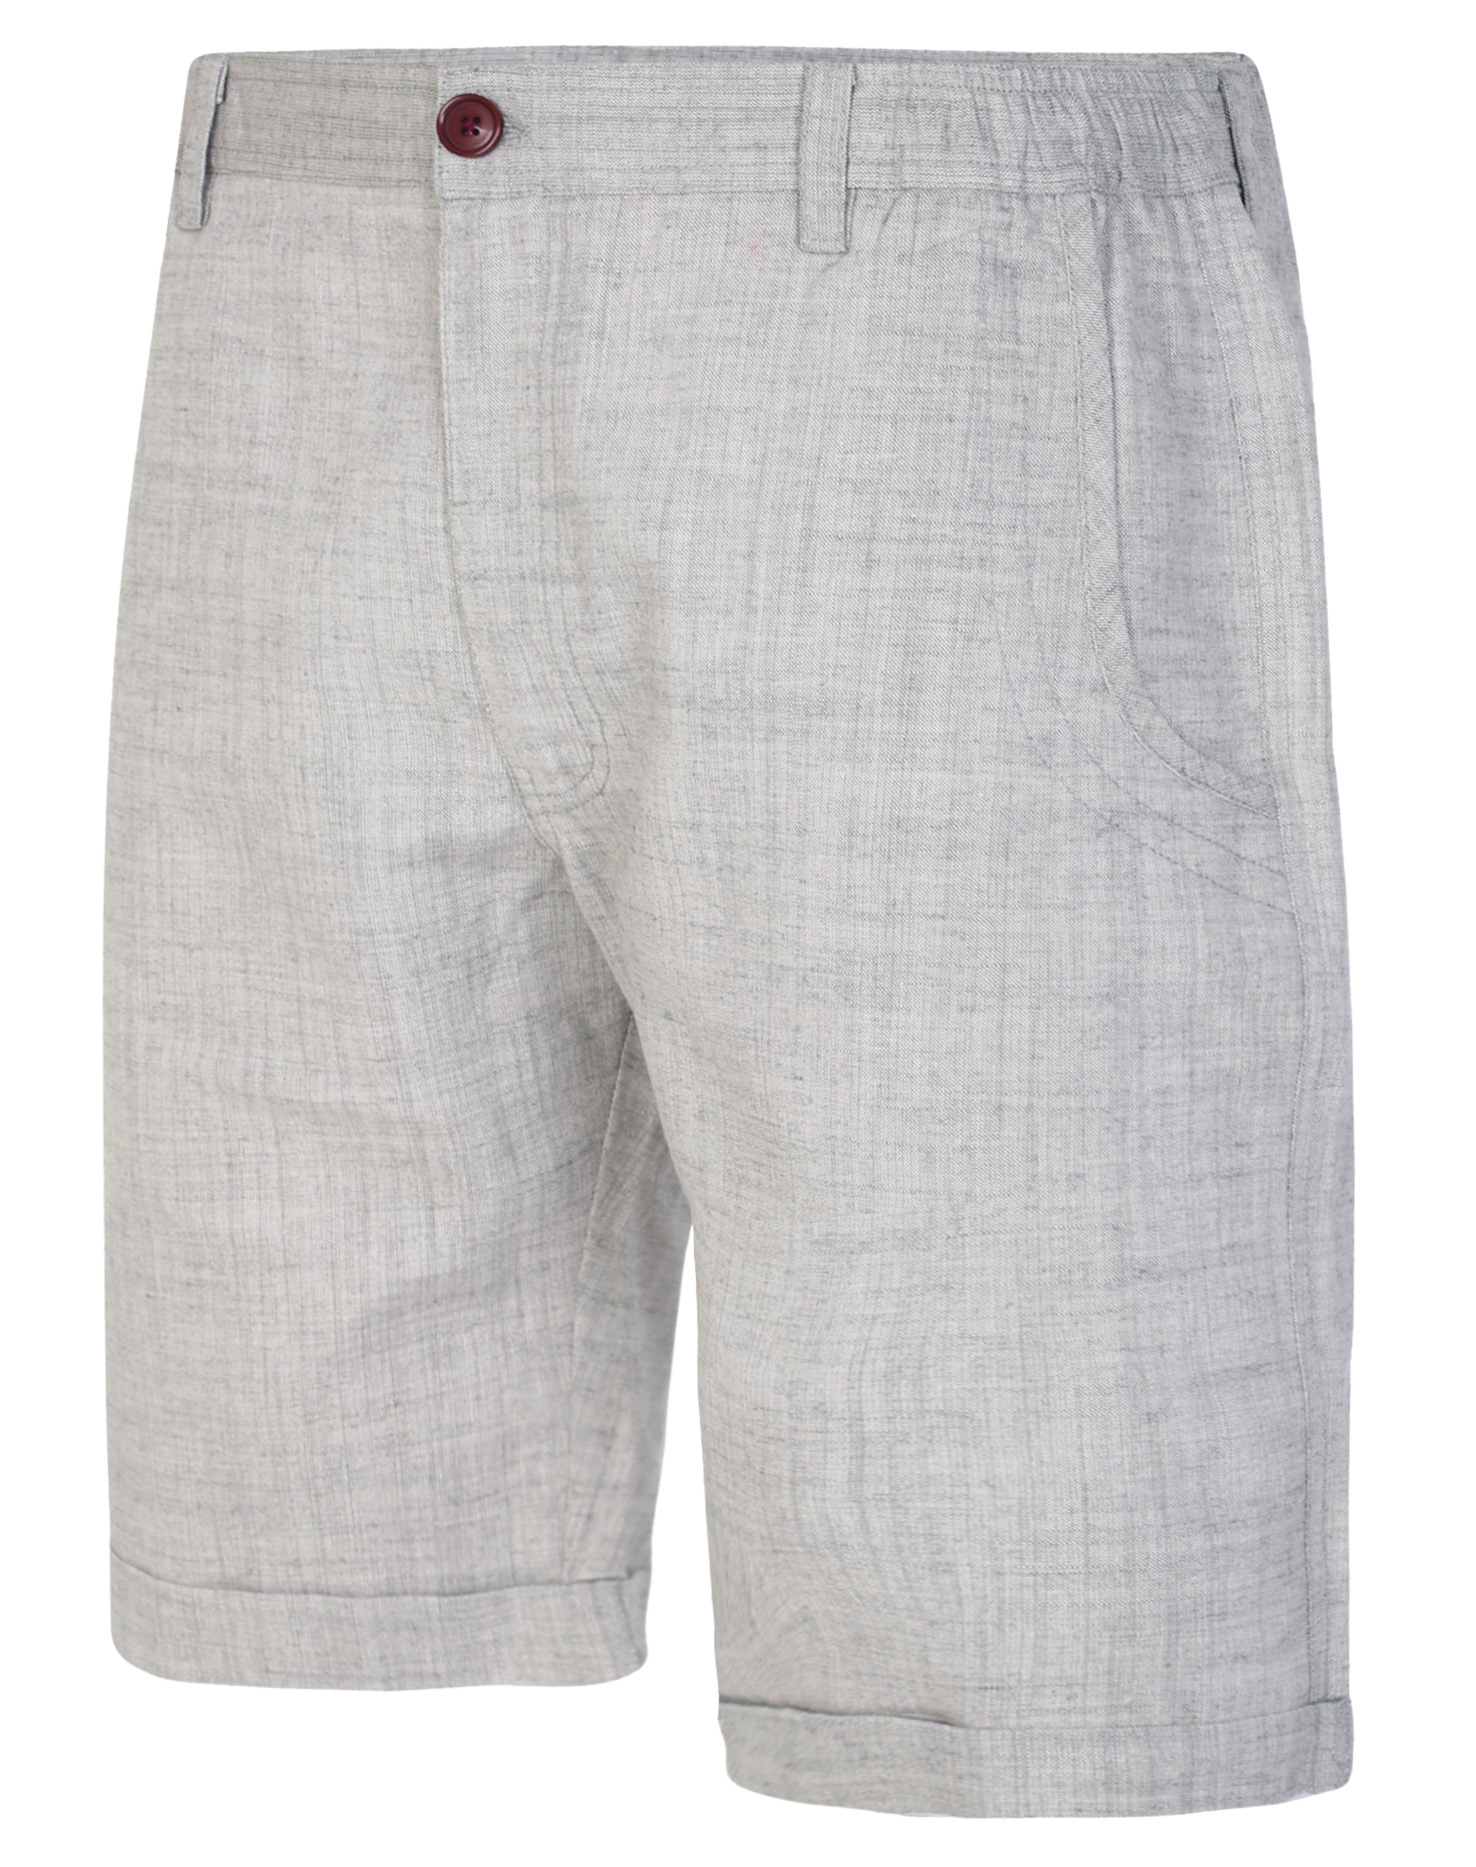 Creekwood Elastic Waist Twill Shorts for Big & Tall Men 100% Pure Cotton 